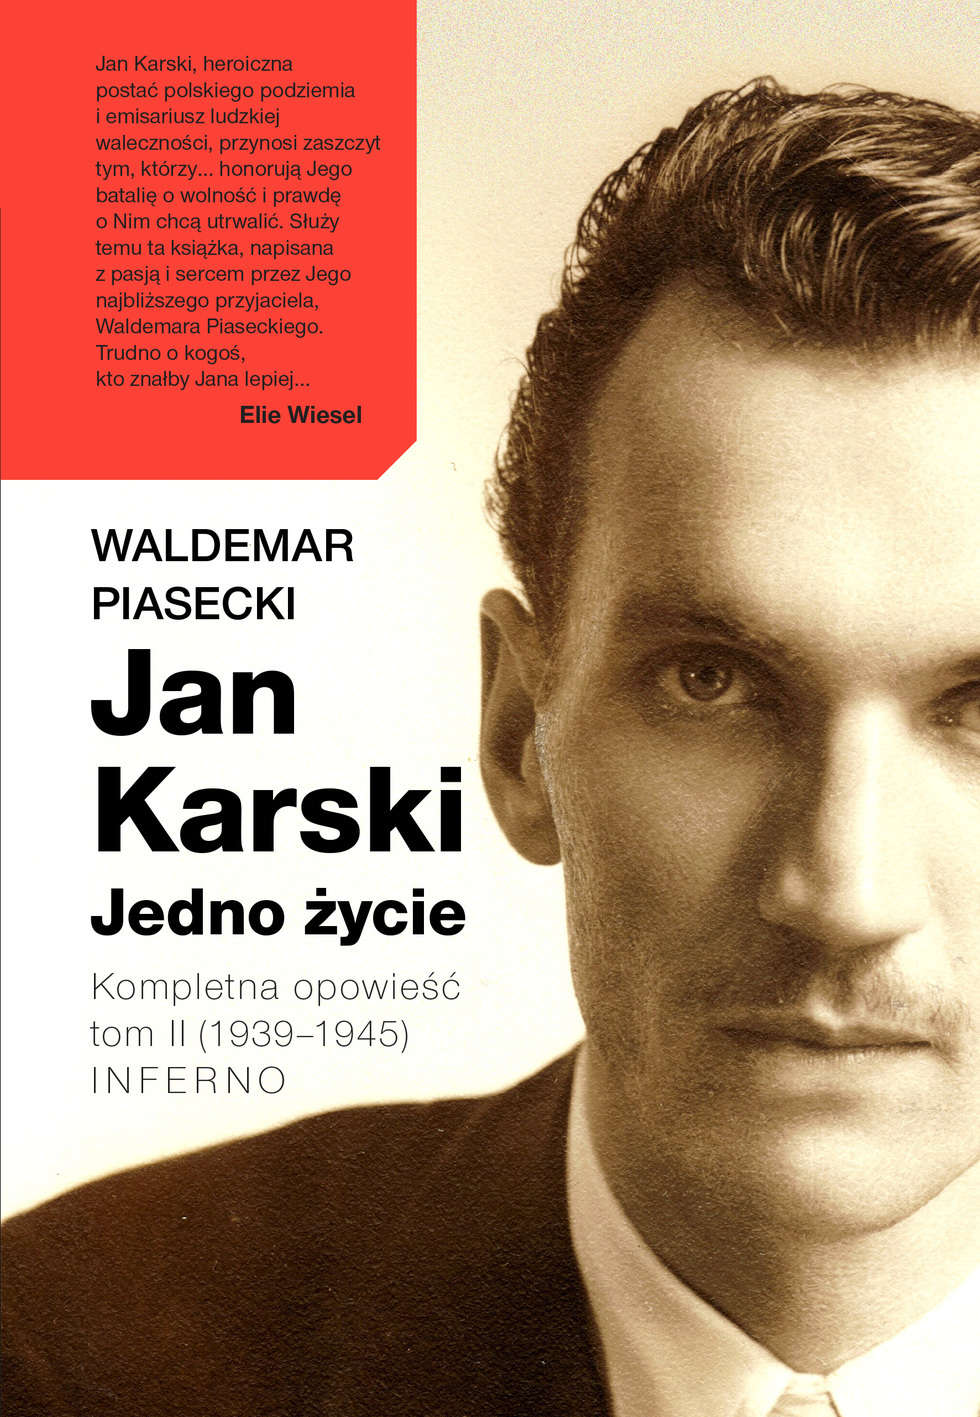  <p><span style="color: #222222; font-family: arial, sans-serif; font-size: 12.8px;">"Inferno", drugi tom biografii "Jan Karski. Jedno życie"</span></p>